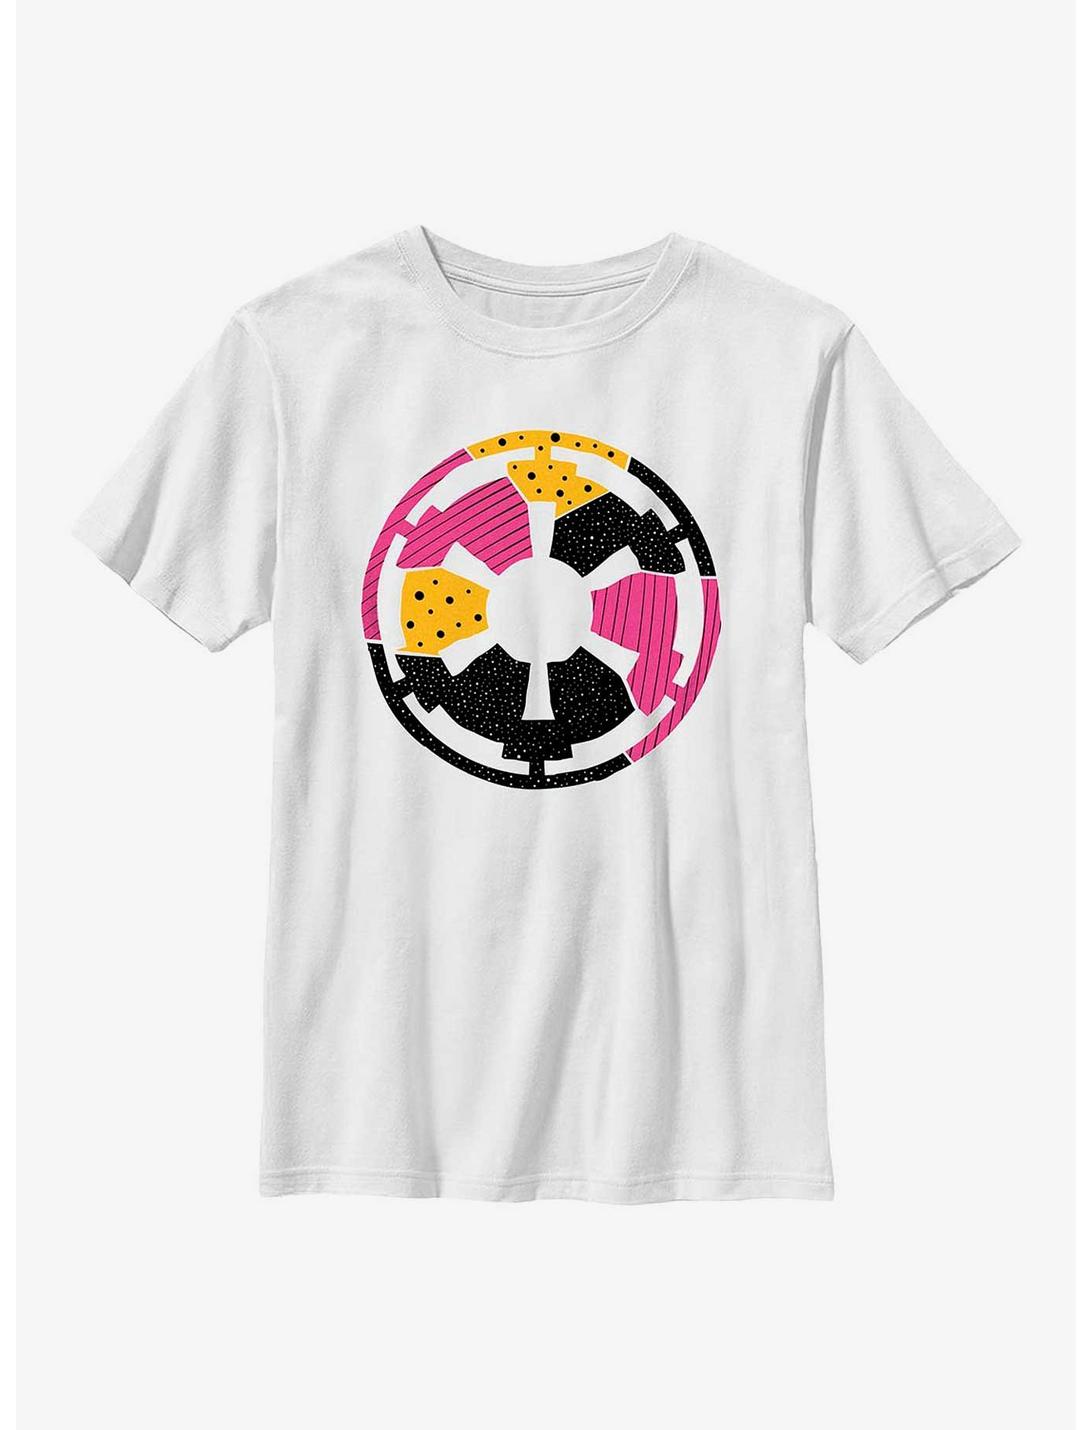 Star Wars Geometric Shaped Empire Symbol Youth T-Shirt, WHITE, hi-res